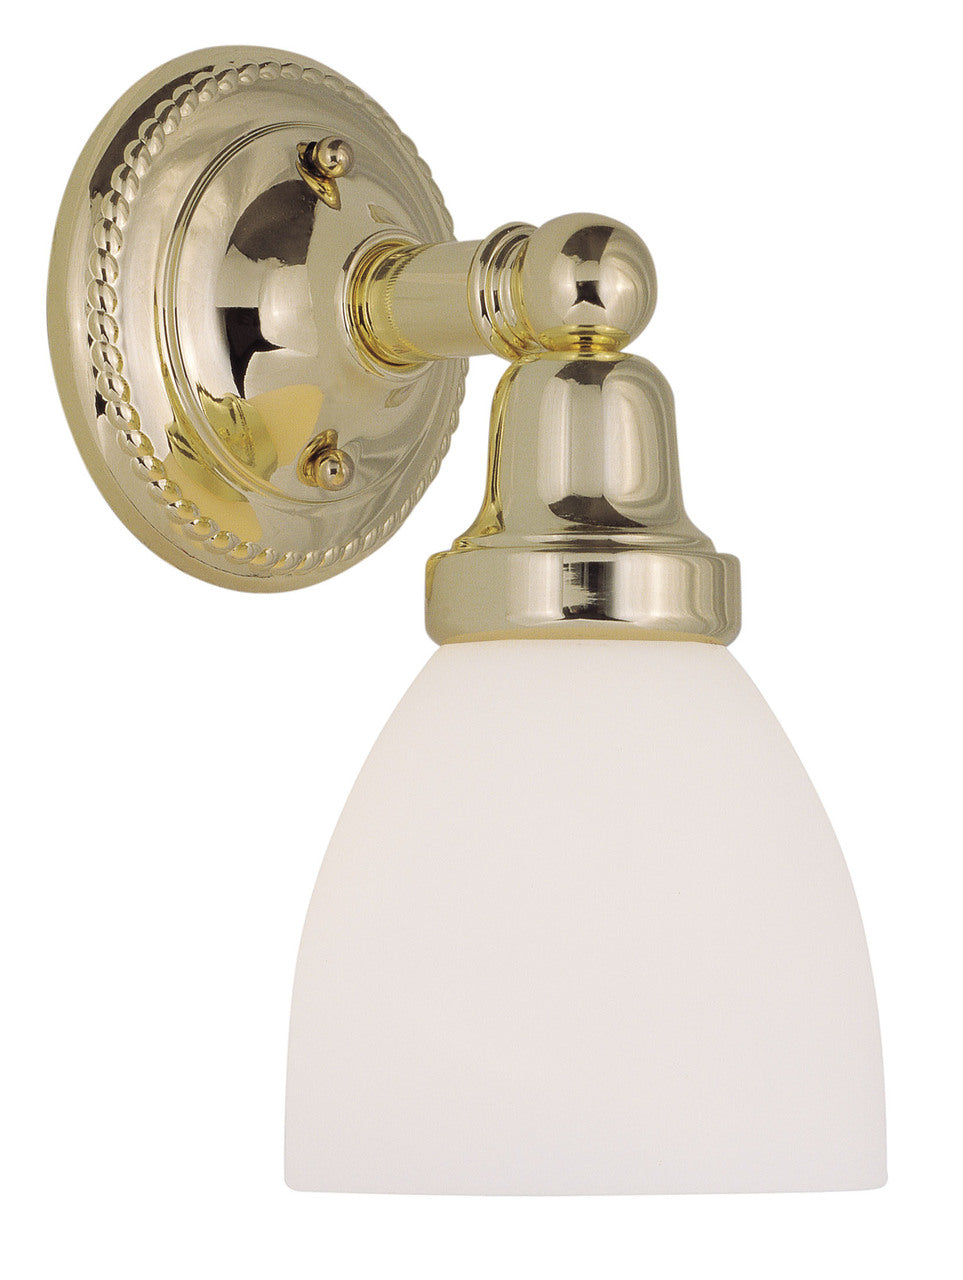 LIVEX Lighting 1021-02 Classic Bath Light in Polished Brass (1 Light)